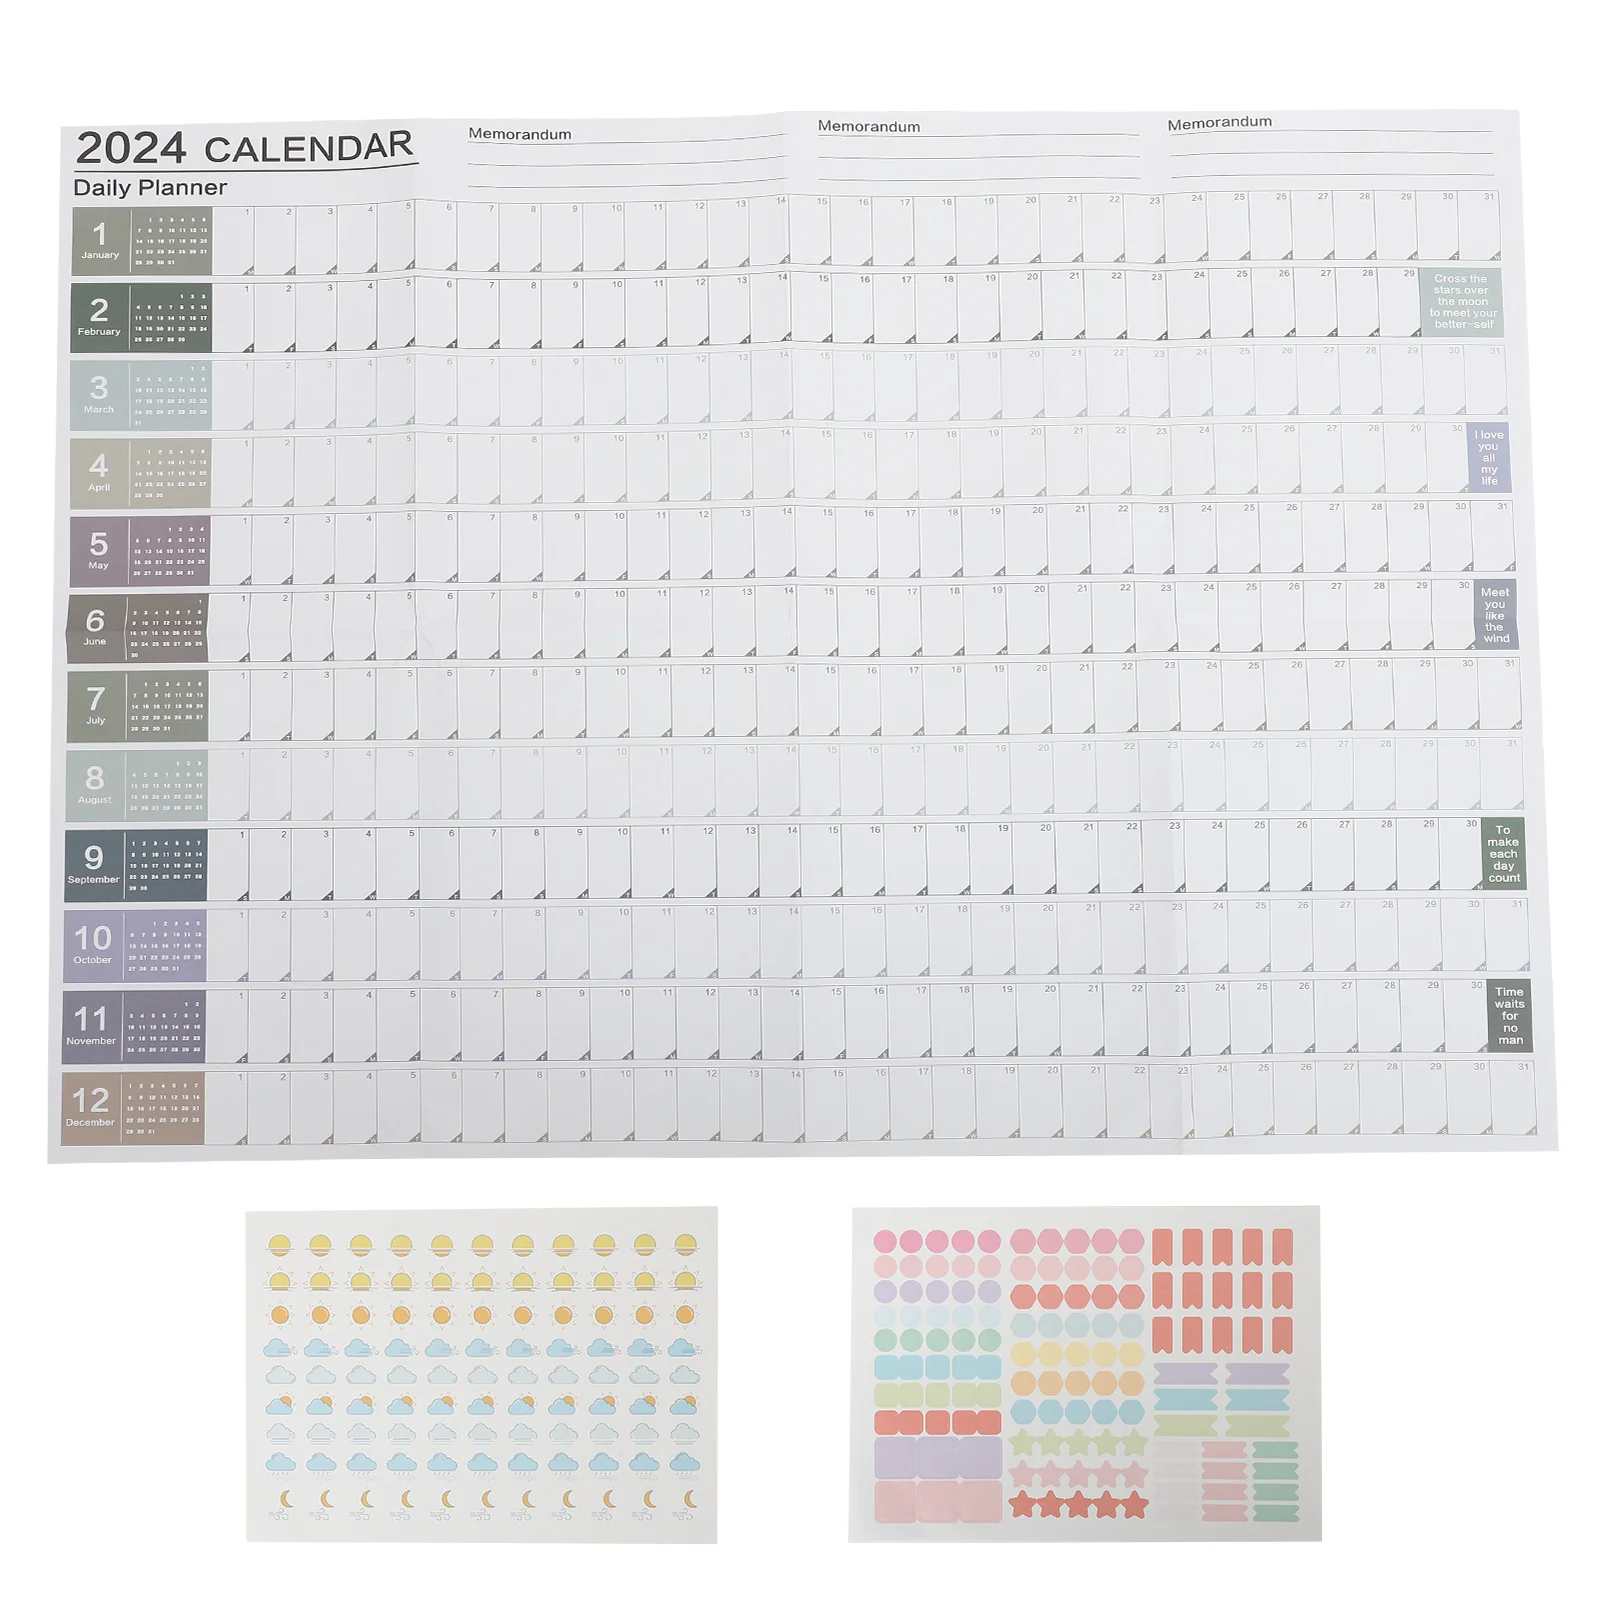 

2024 Wall Calendar Planner Yearly Schedule Home Desk Calendars Agenda Planning Desktop Multifunction